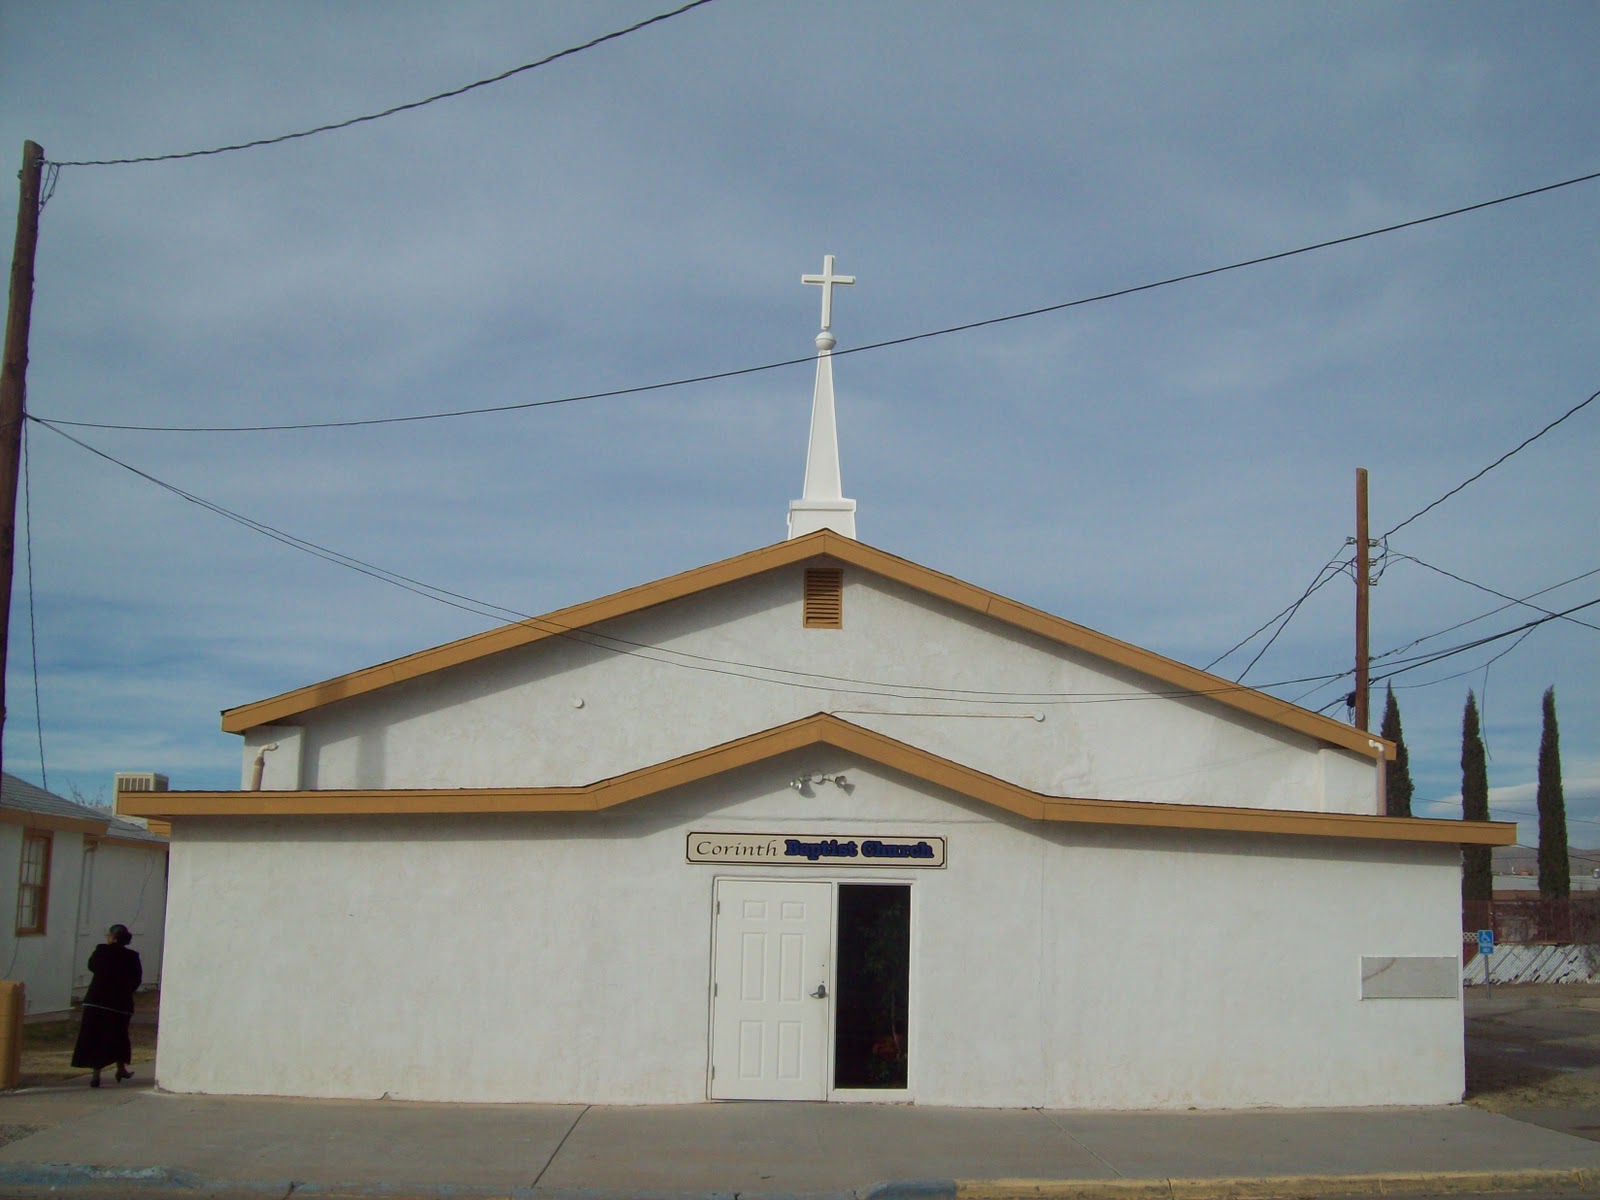 Backyard New Mexico Alamogordo Churches